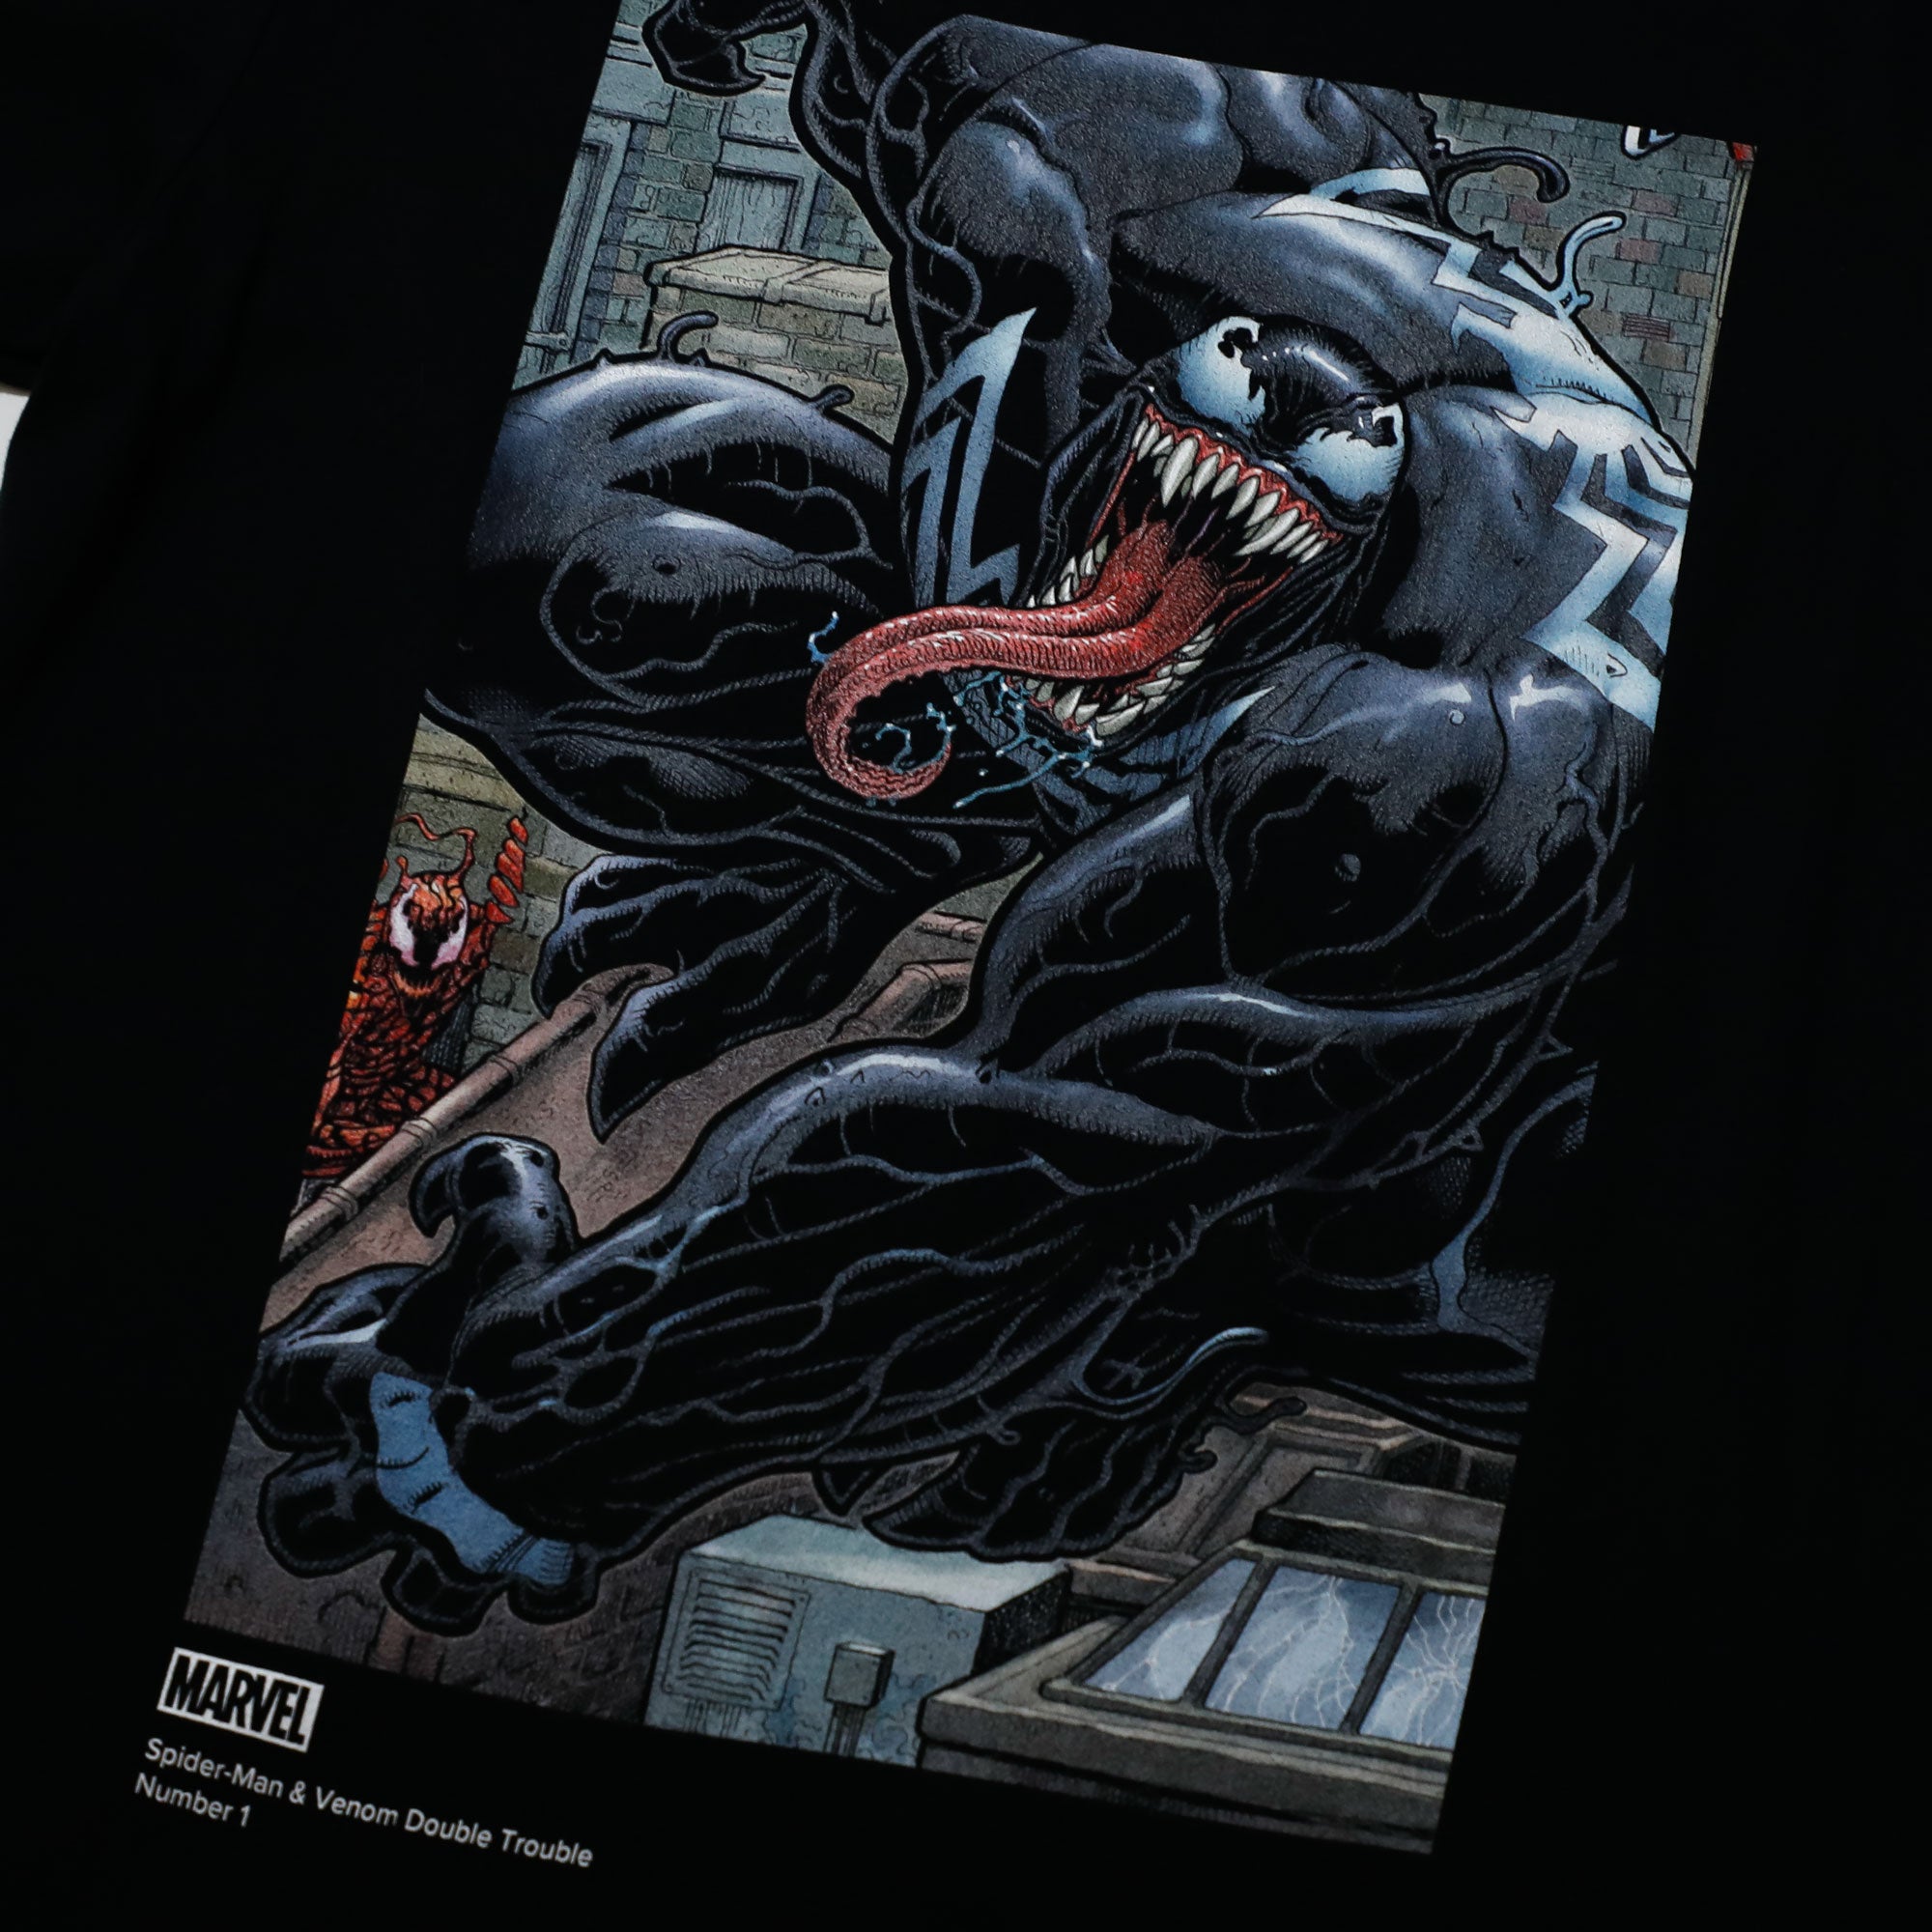 Spider-Man & Venom: Double Trouble #1 Cover Black Tee